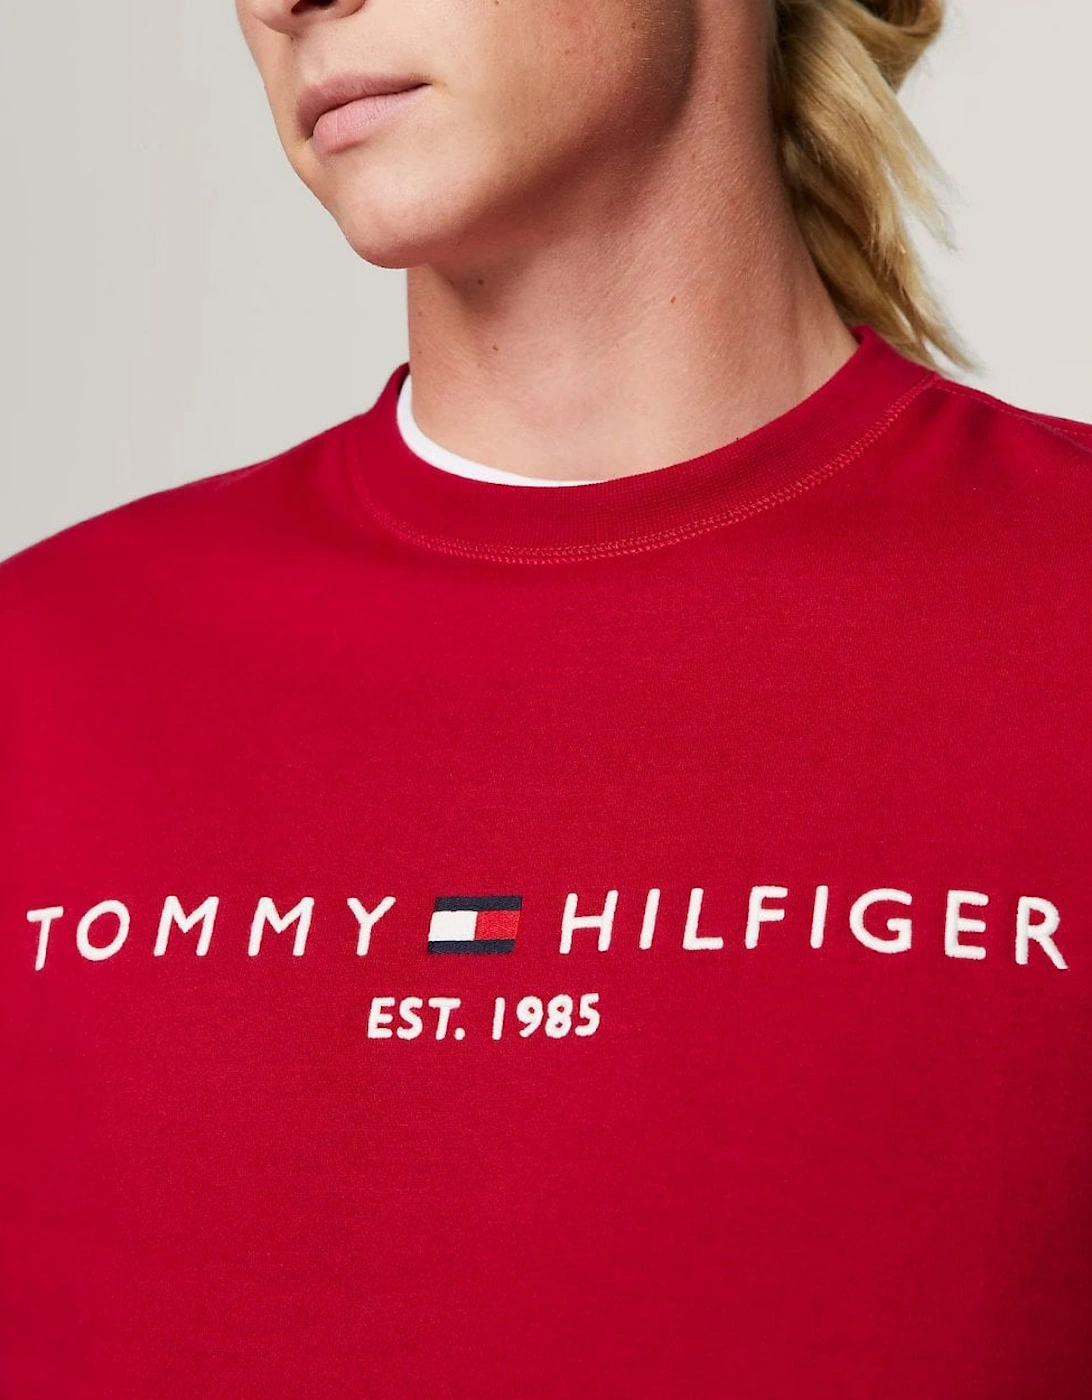 Tommy Logo Mens Sweatshirt